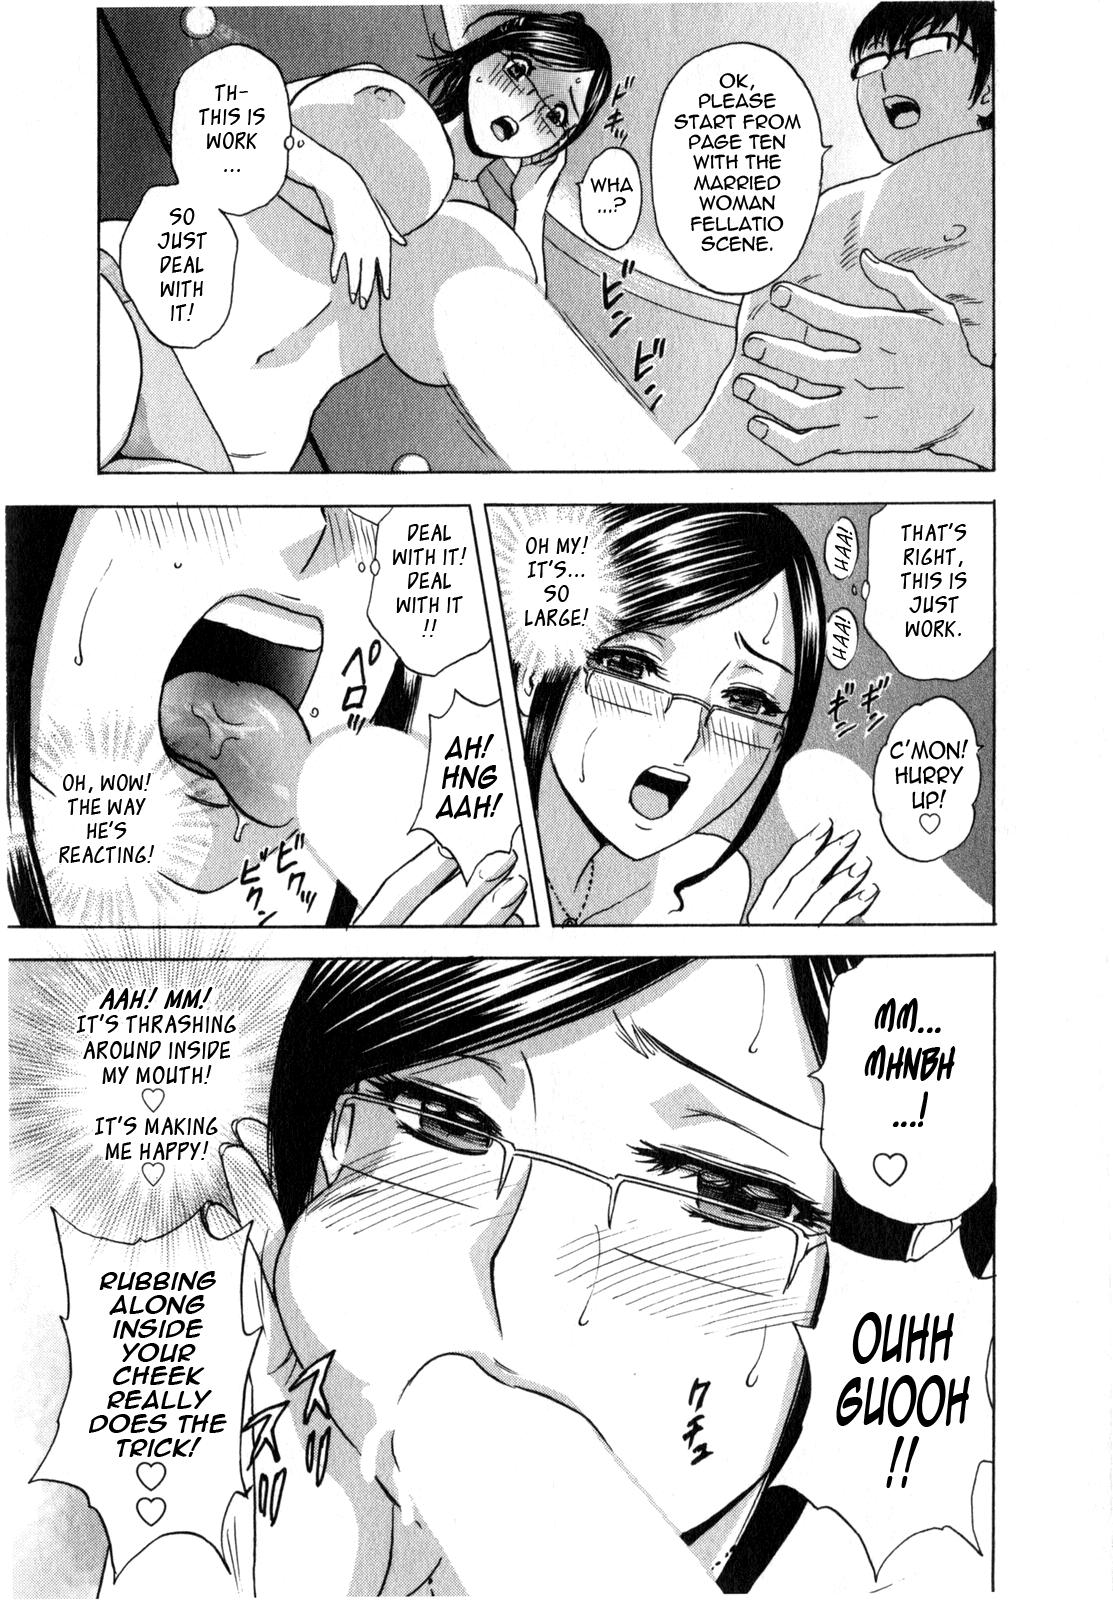 [Hidemaru] Life with Married Women Just Like a Manga 2 - Ch. 1-8 [English] {Tadanohito} 18